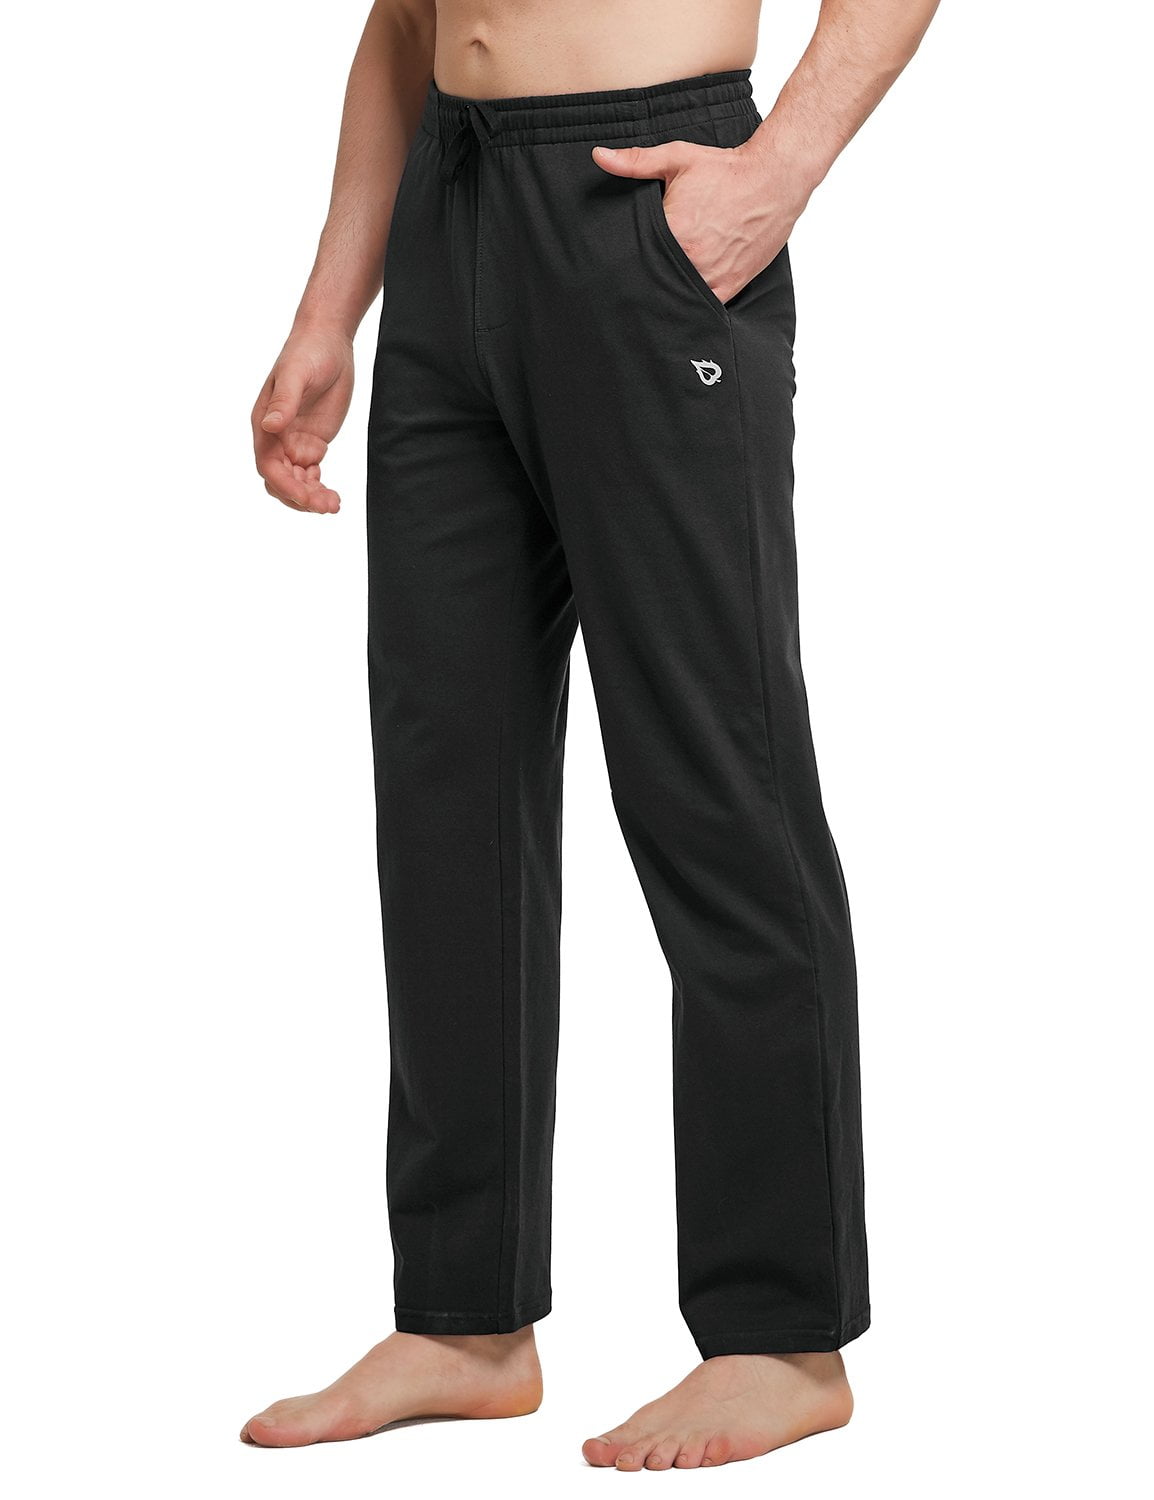 BALEAF Mens Athletic Sweatpants Running Training Sports Pants Zipper Pocketed Open-Bottom Lounge Pants 